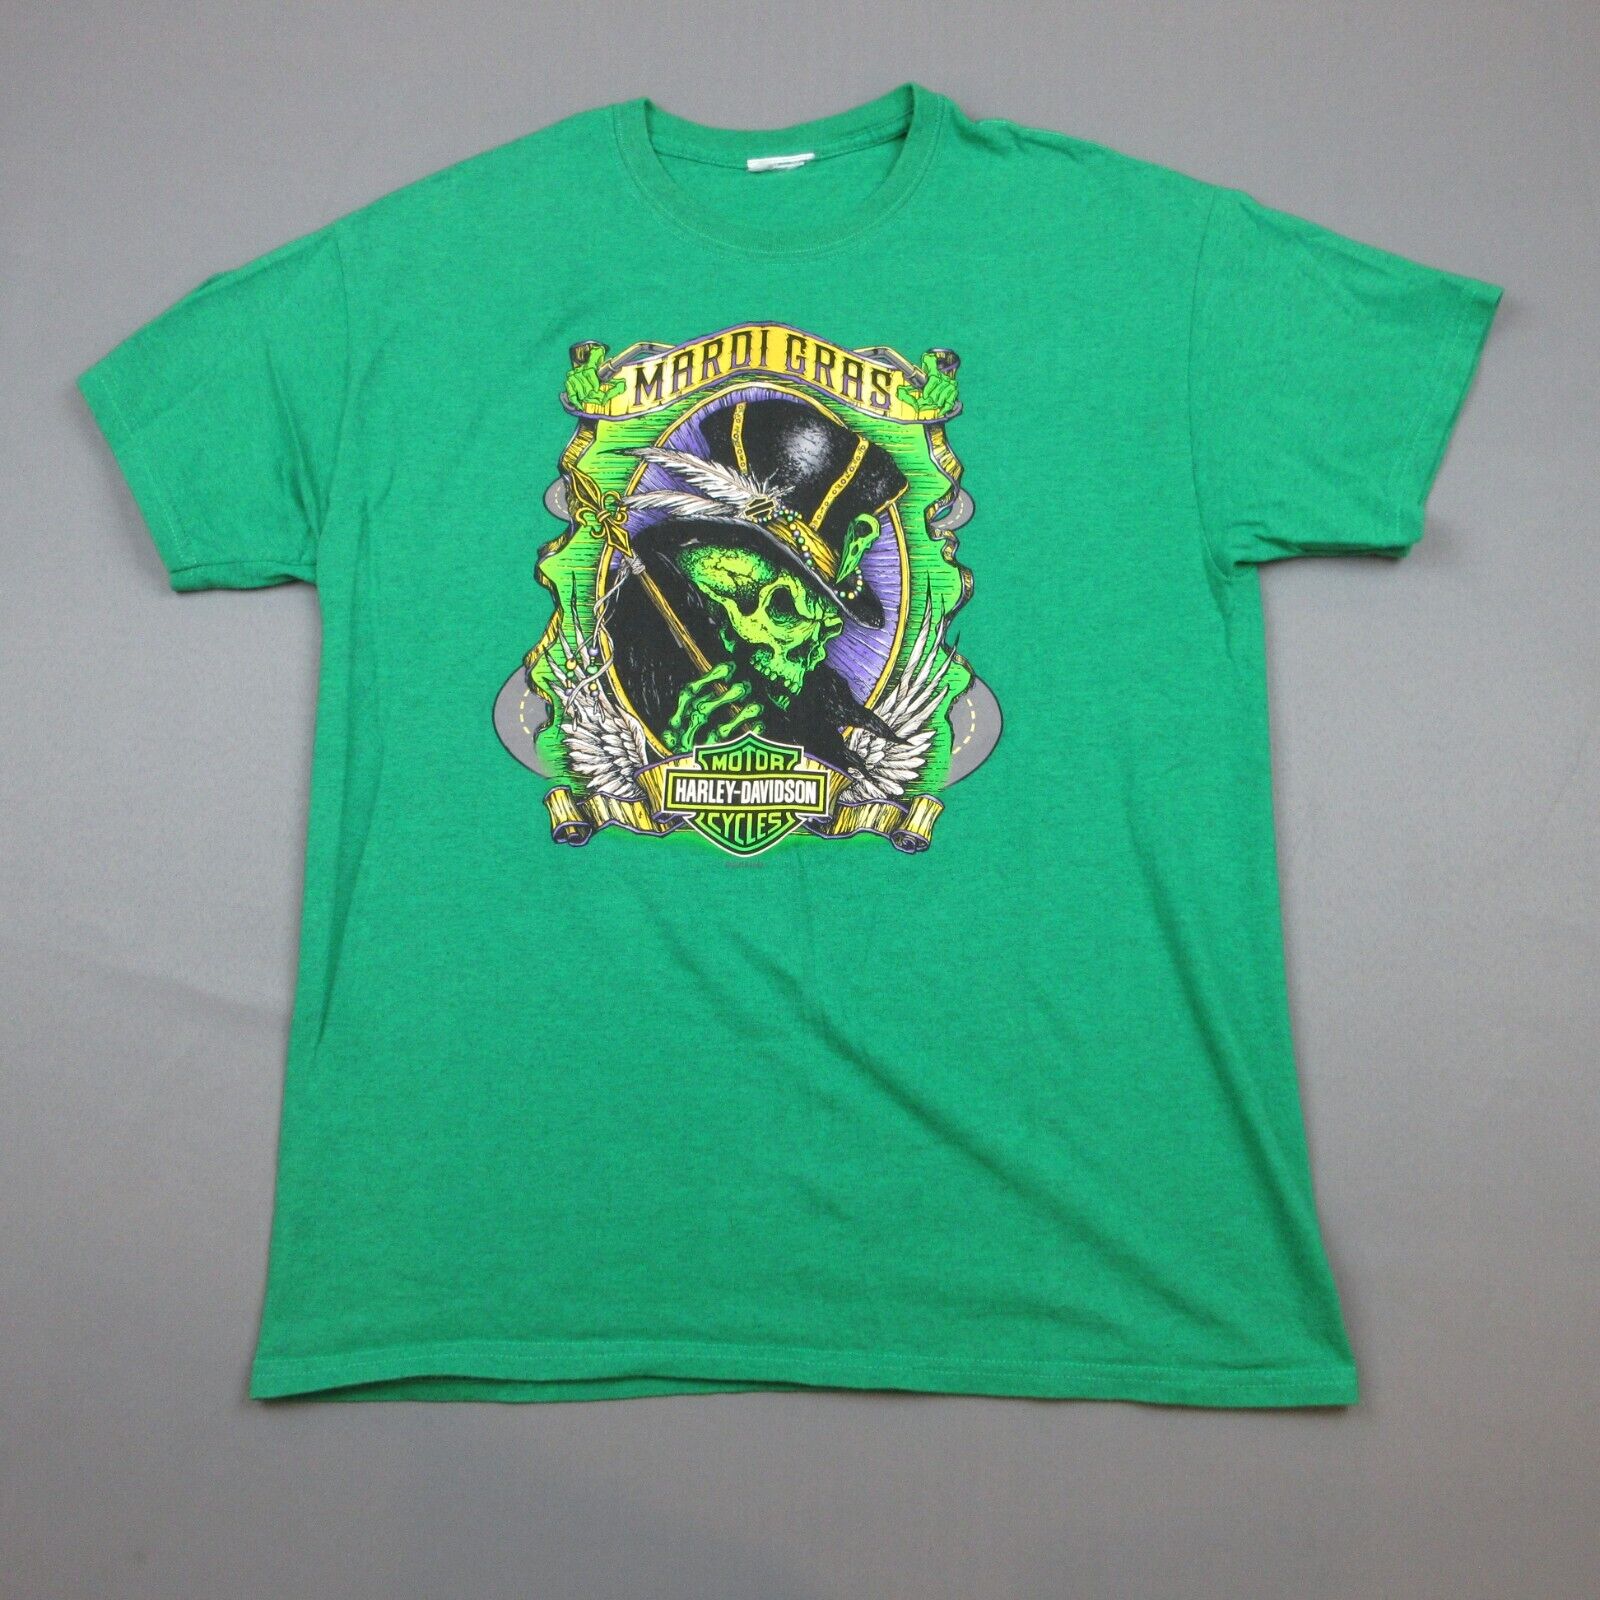 Harley Davidson Shirt Mens Medium Green Voodoo Mardi Gras New Orleans Louisiana